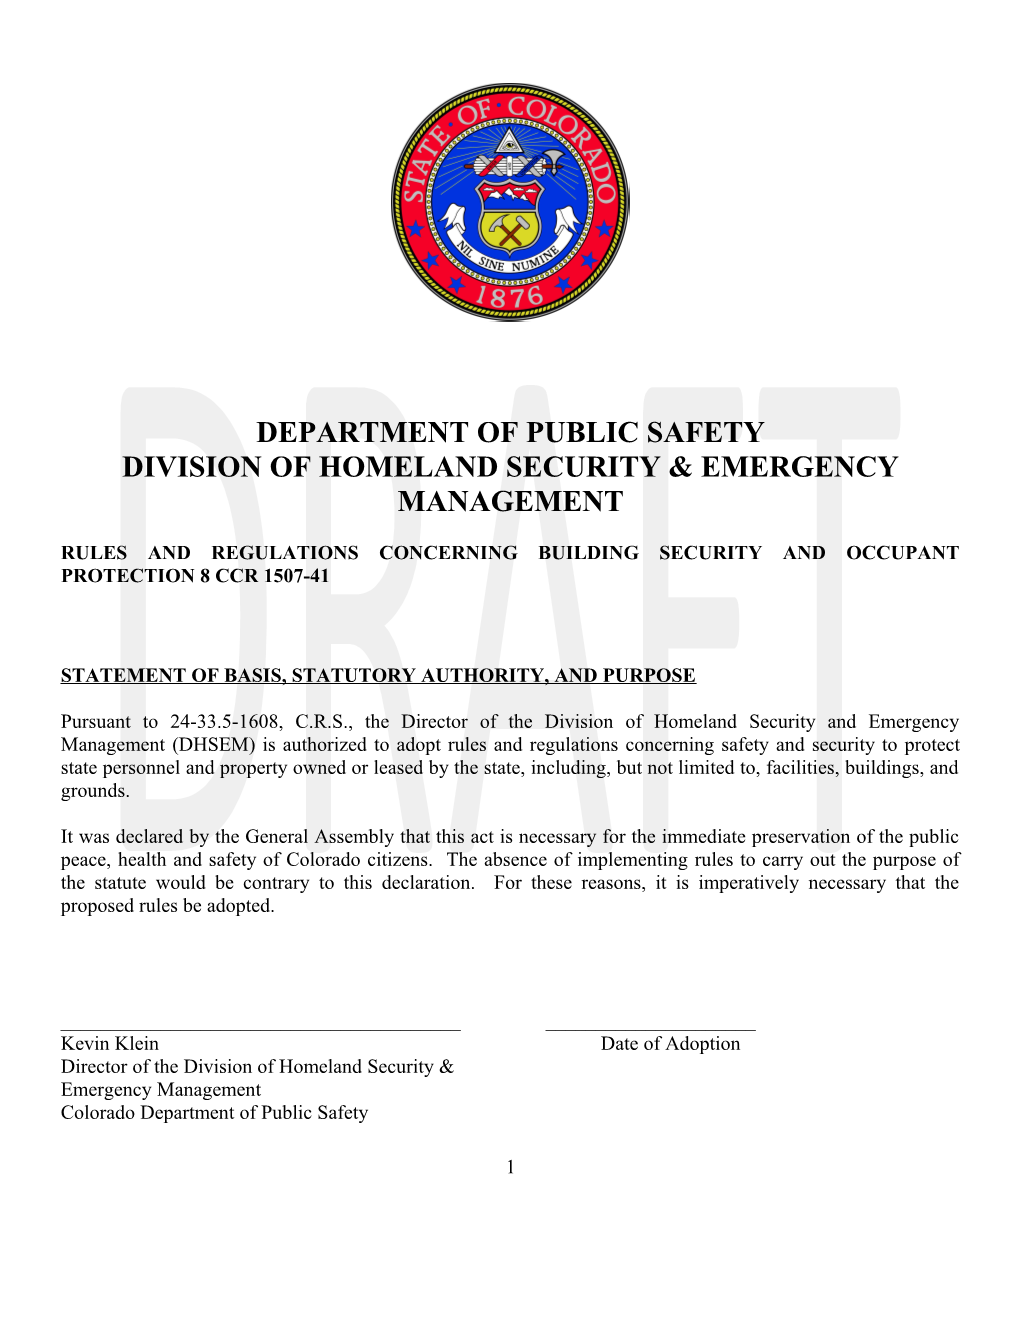 Division of Homeland Security & Emergency Management